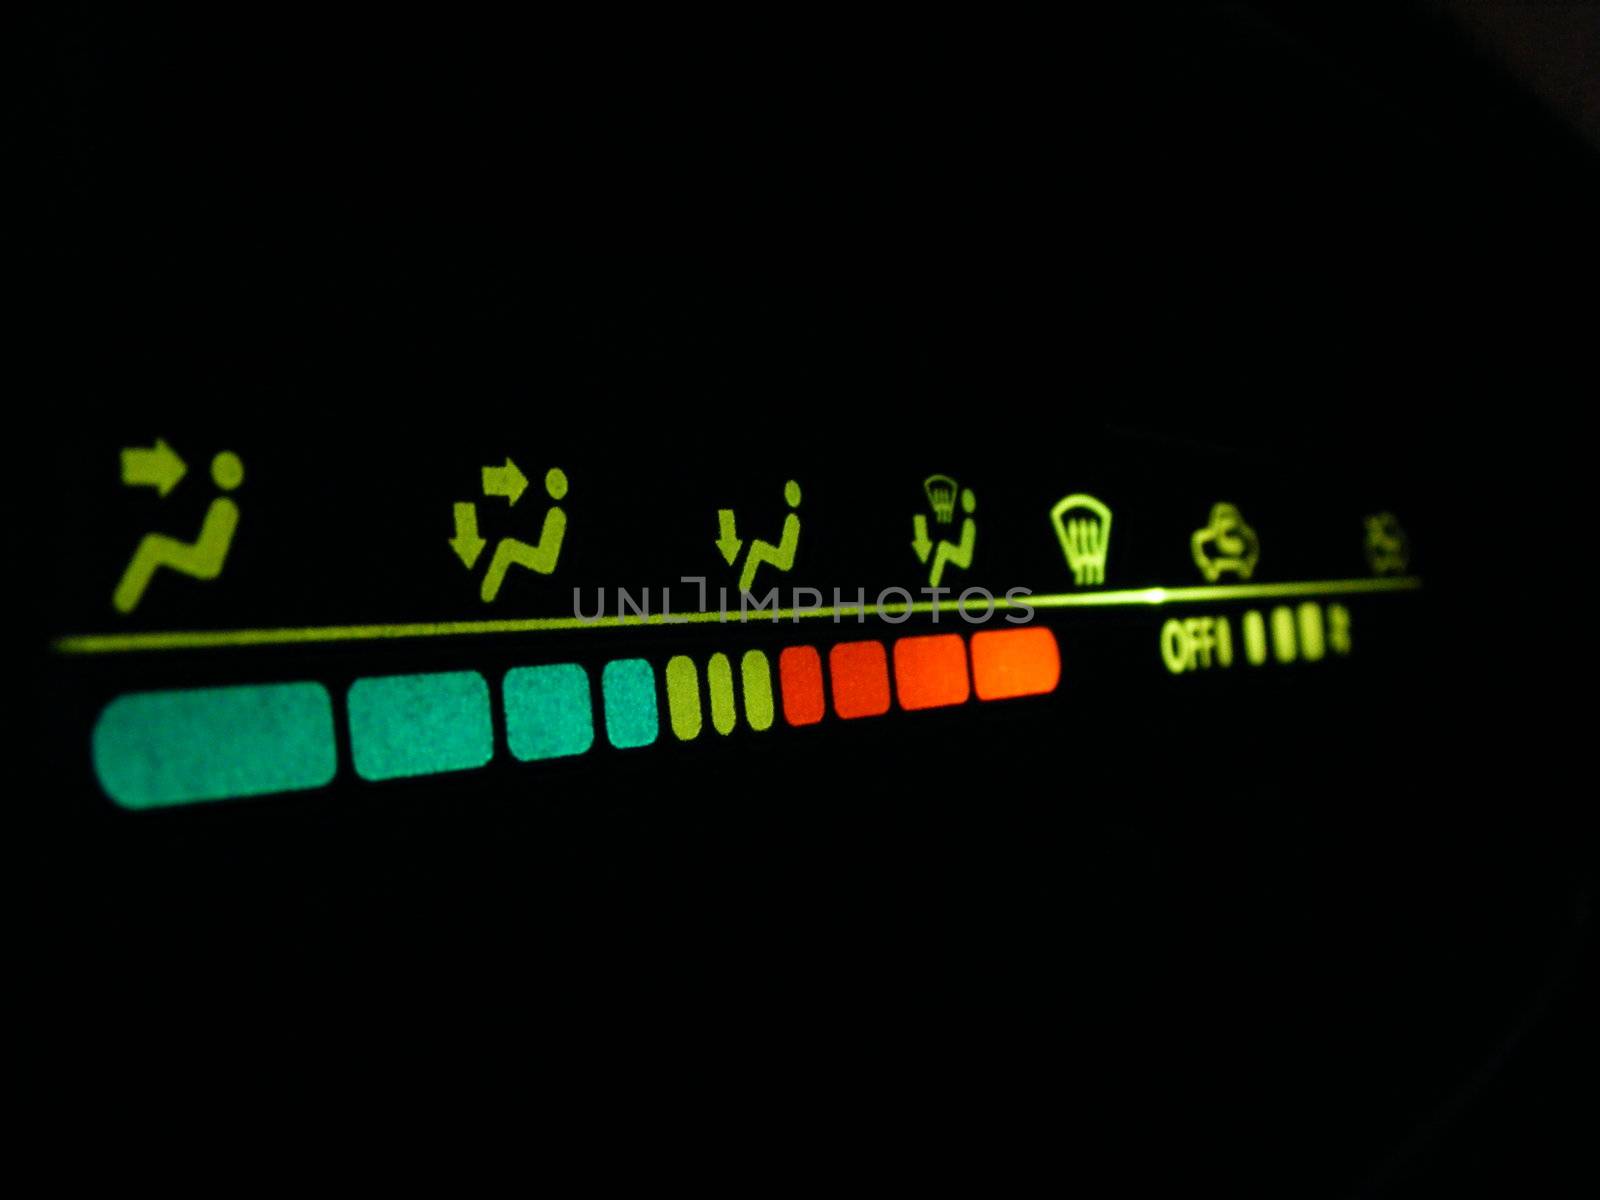 A photograph of the interior car temprature meter.